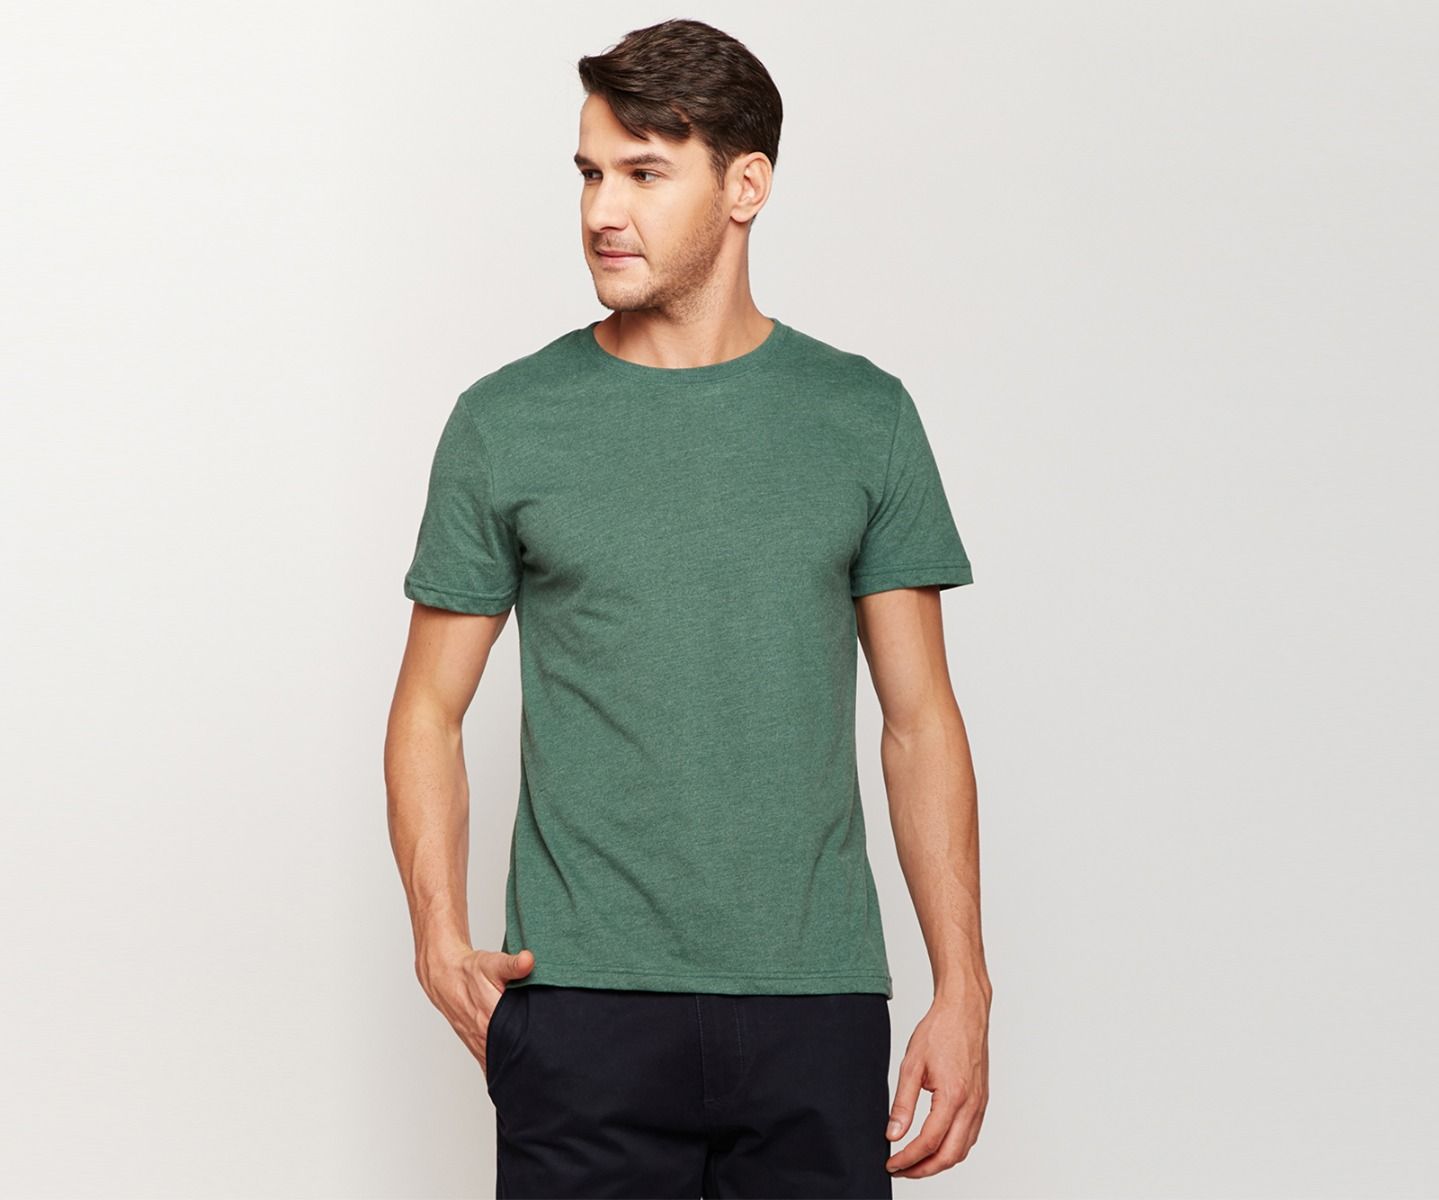 Emerald Green Peach finish T-shirt